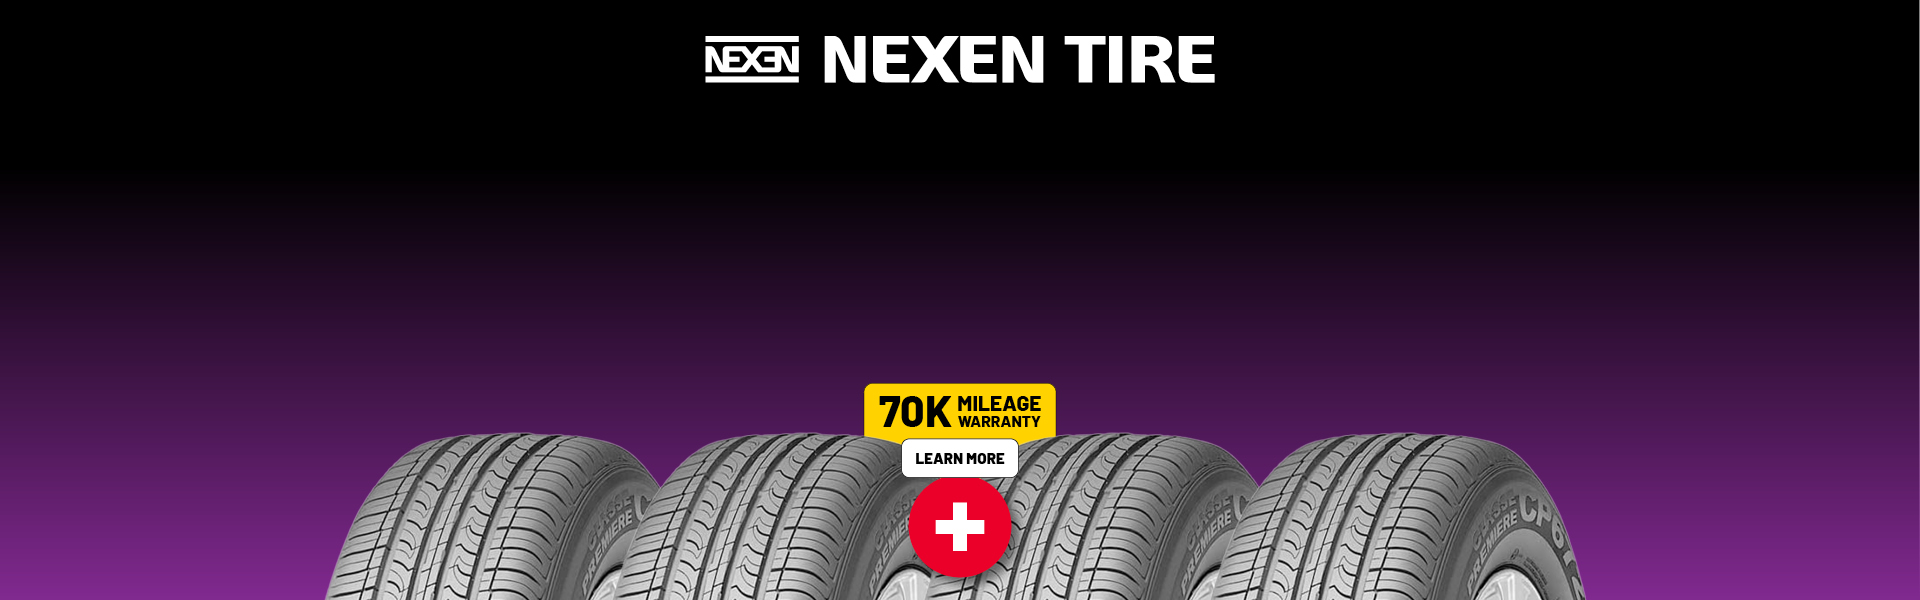 Nexen Tire Deal Buy 3 Get 1 Free